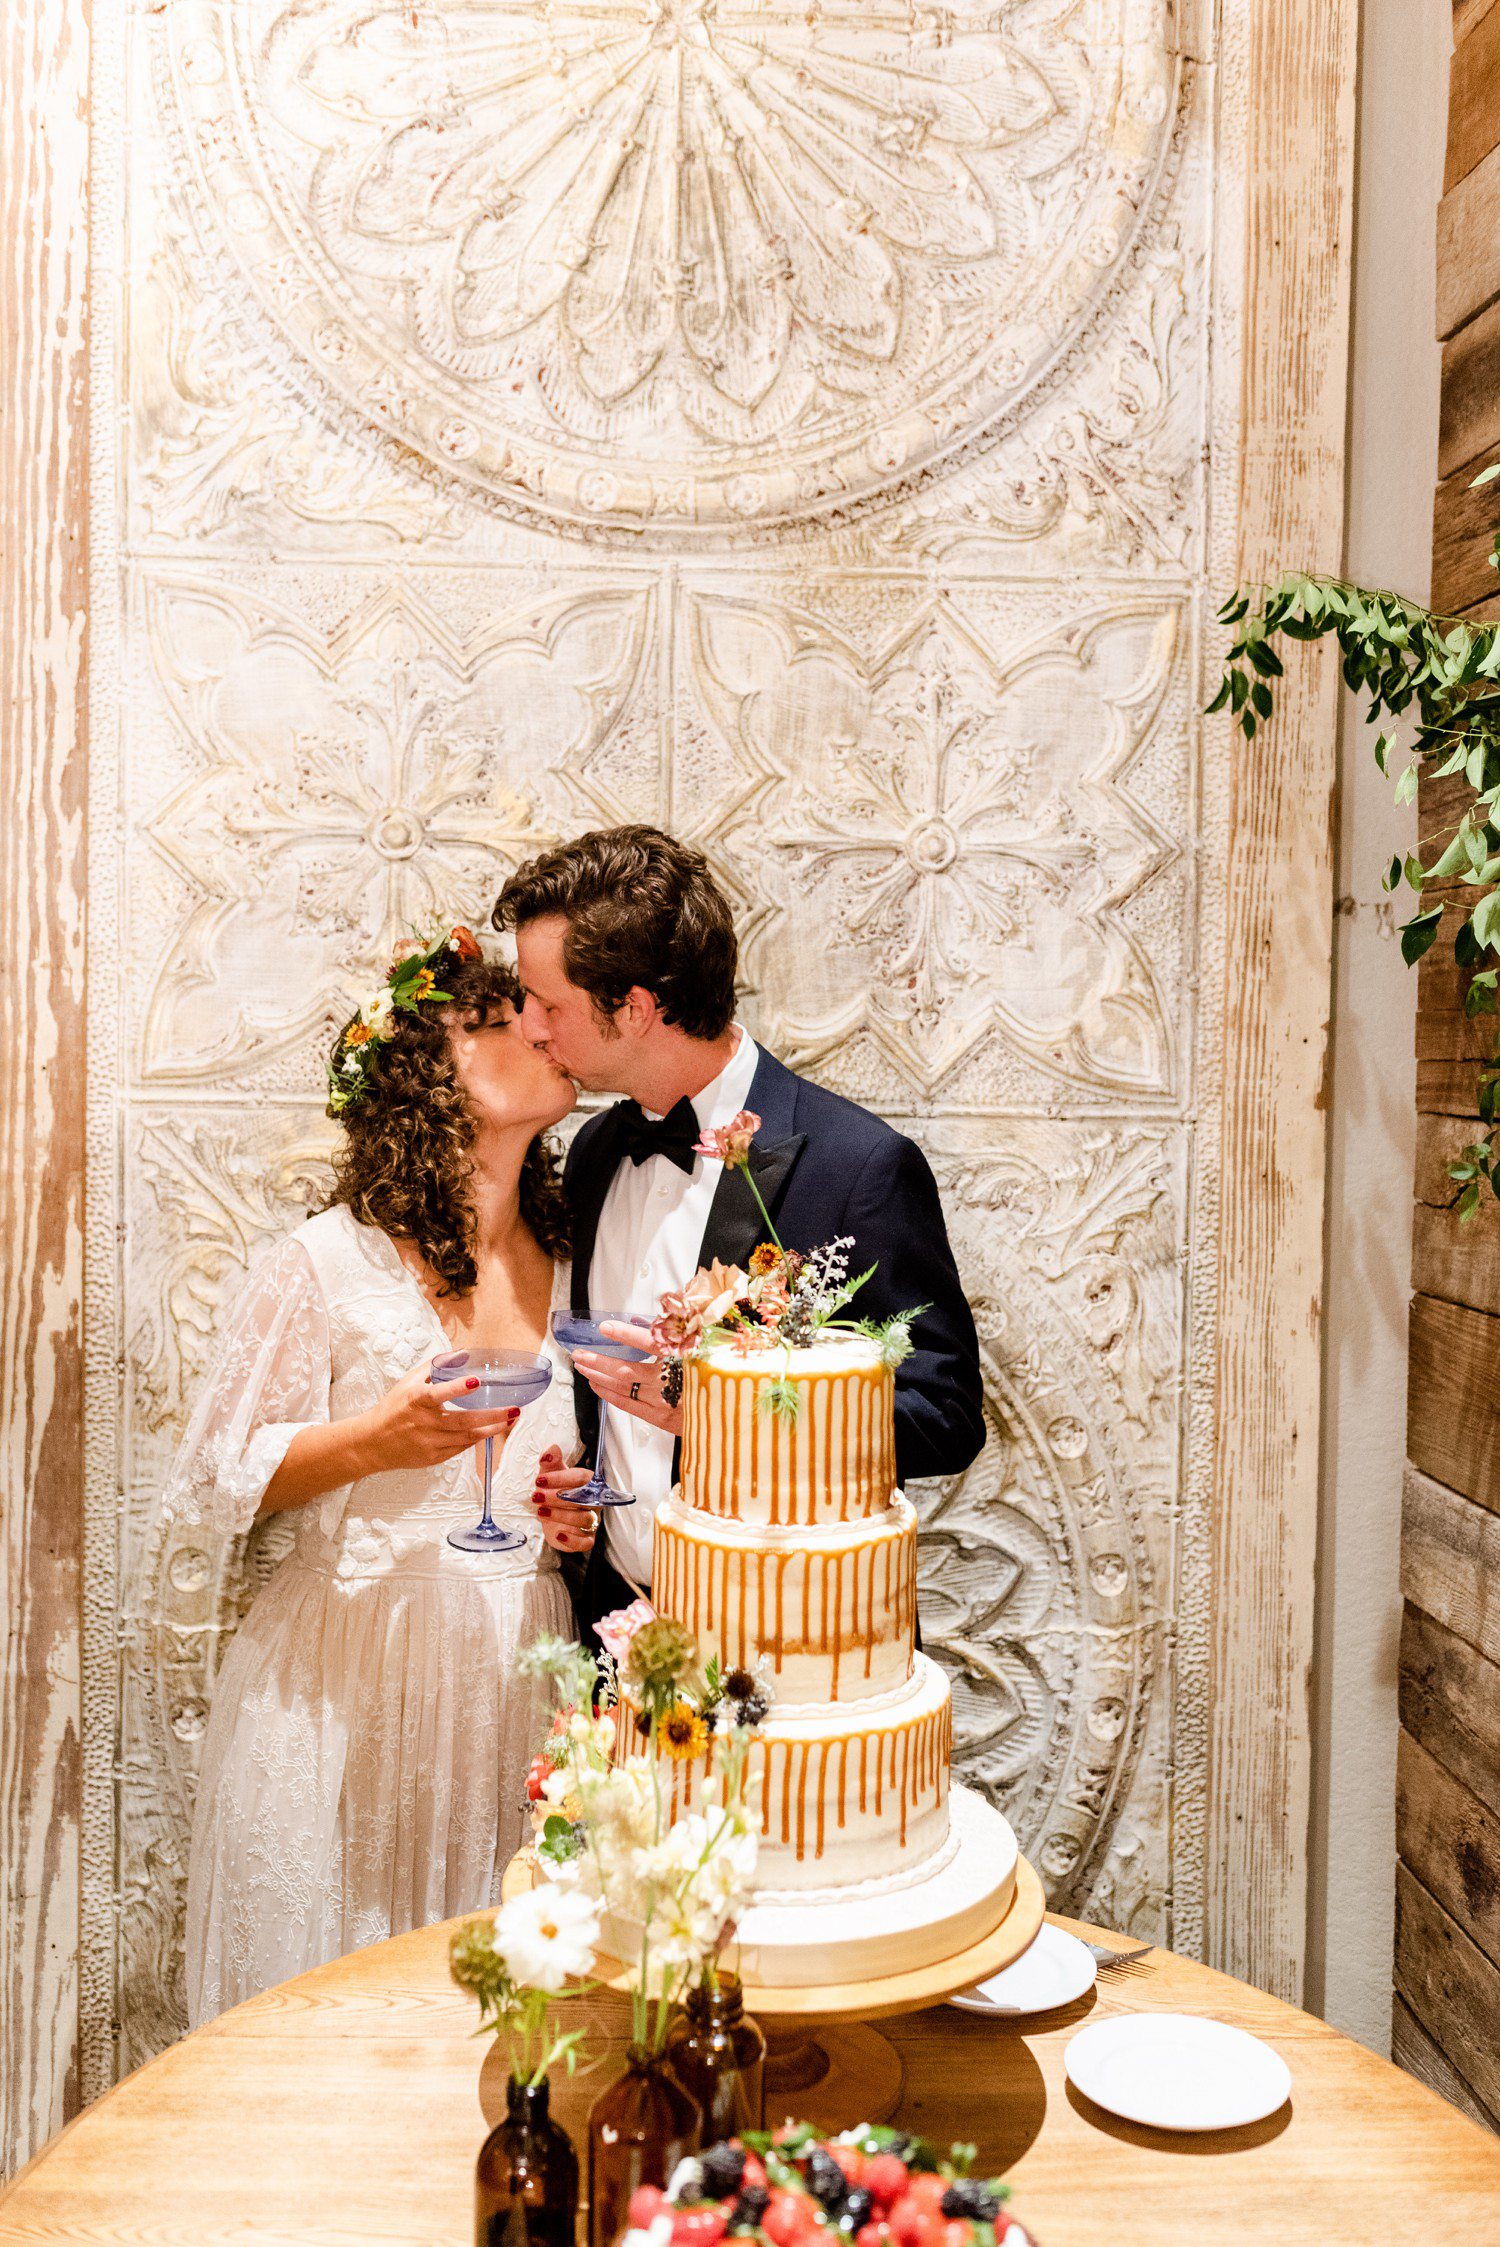 Bride and groom kiss with wedding cake